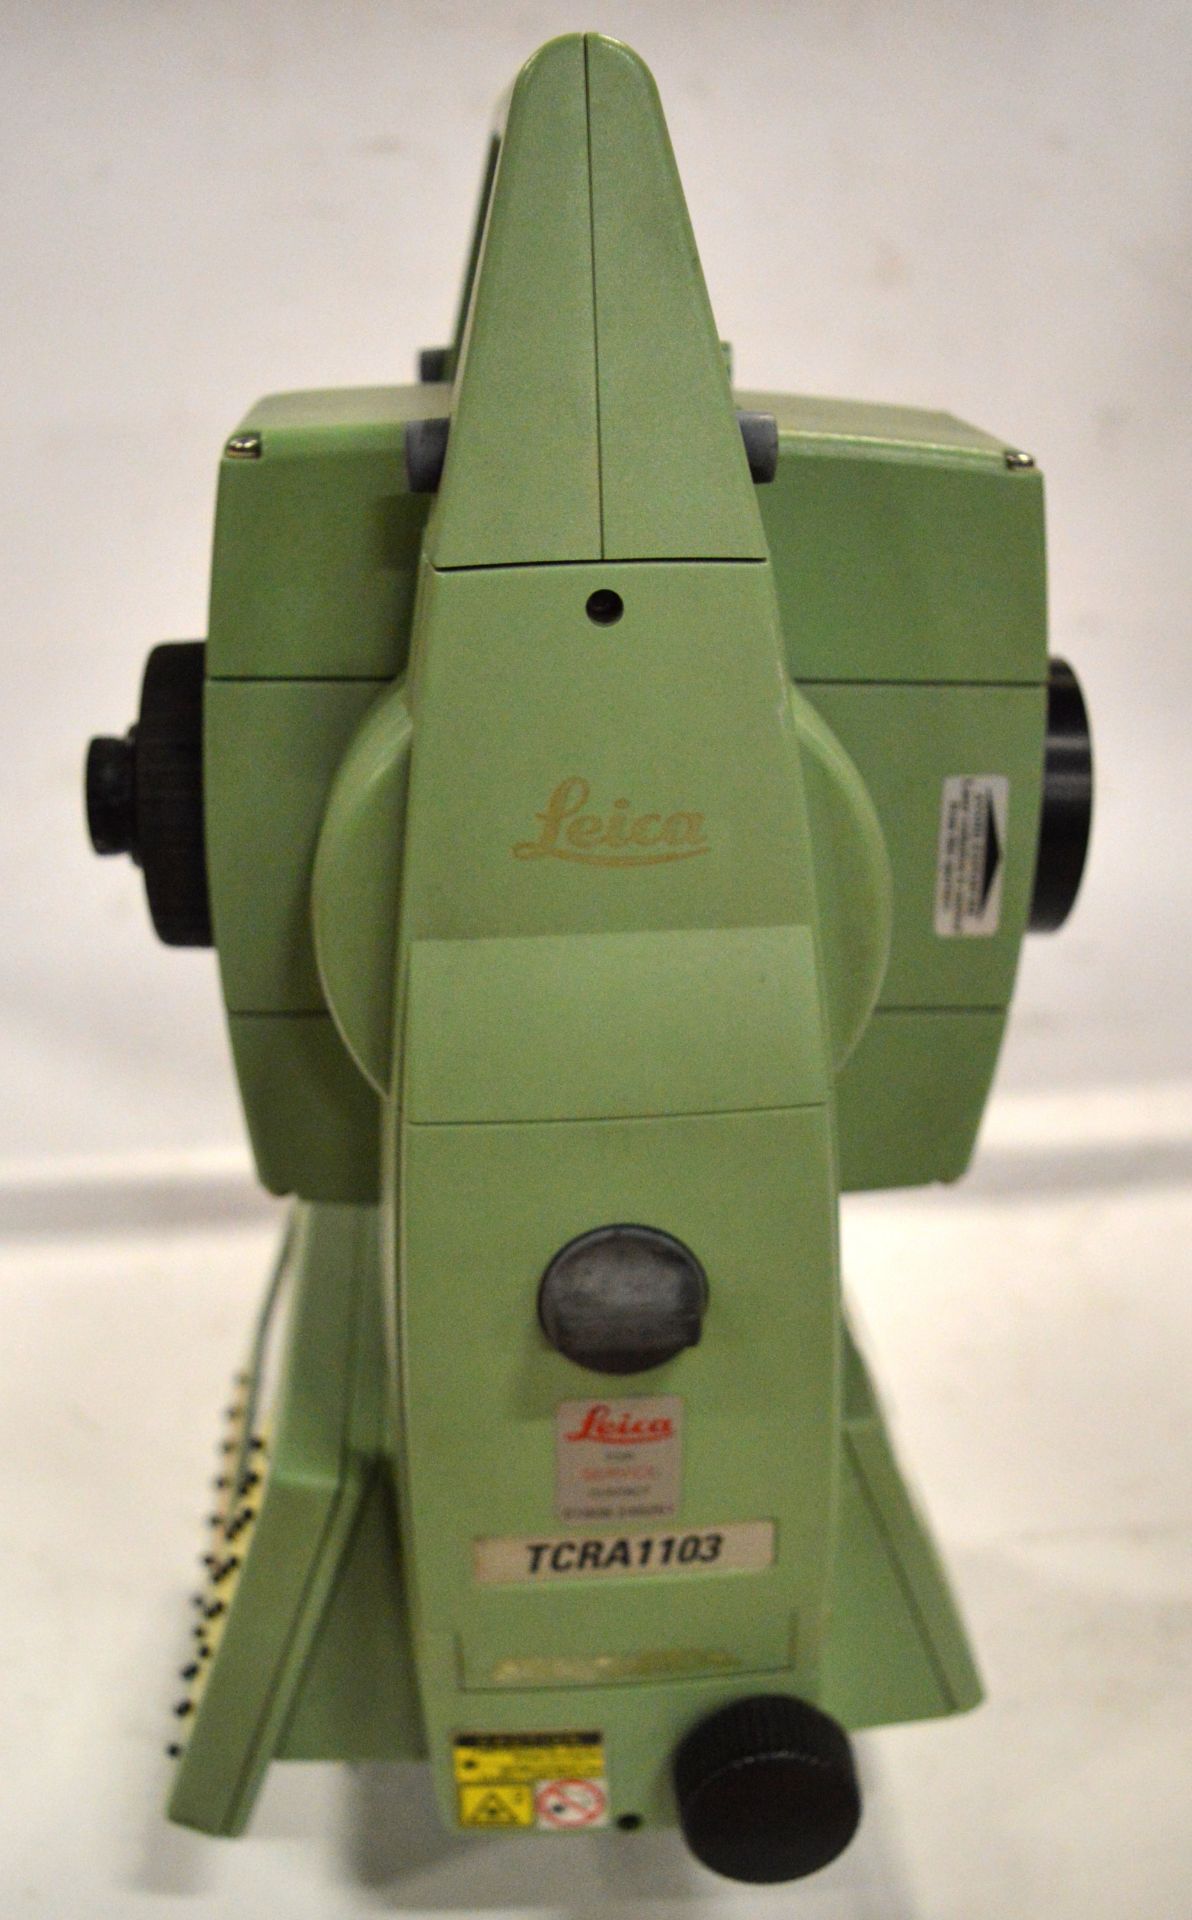 Leica TCRA1103 Surveying Equipment. - Image 3 of 5